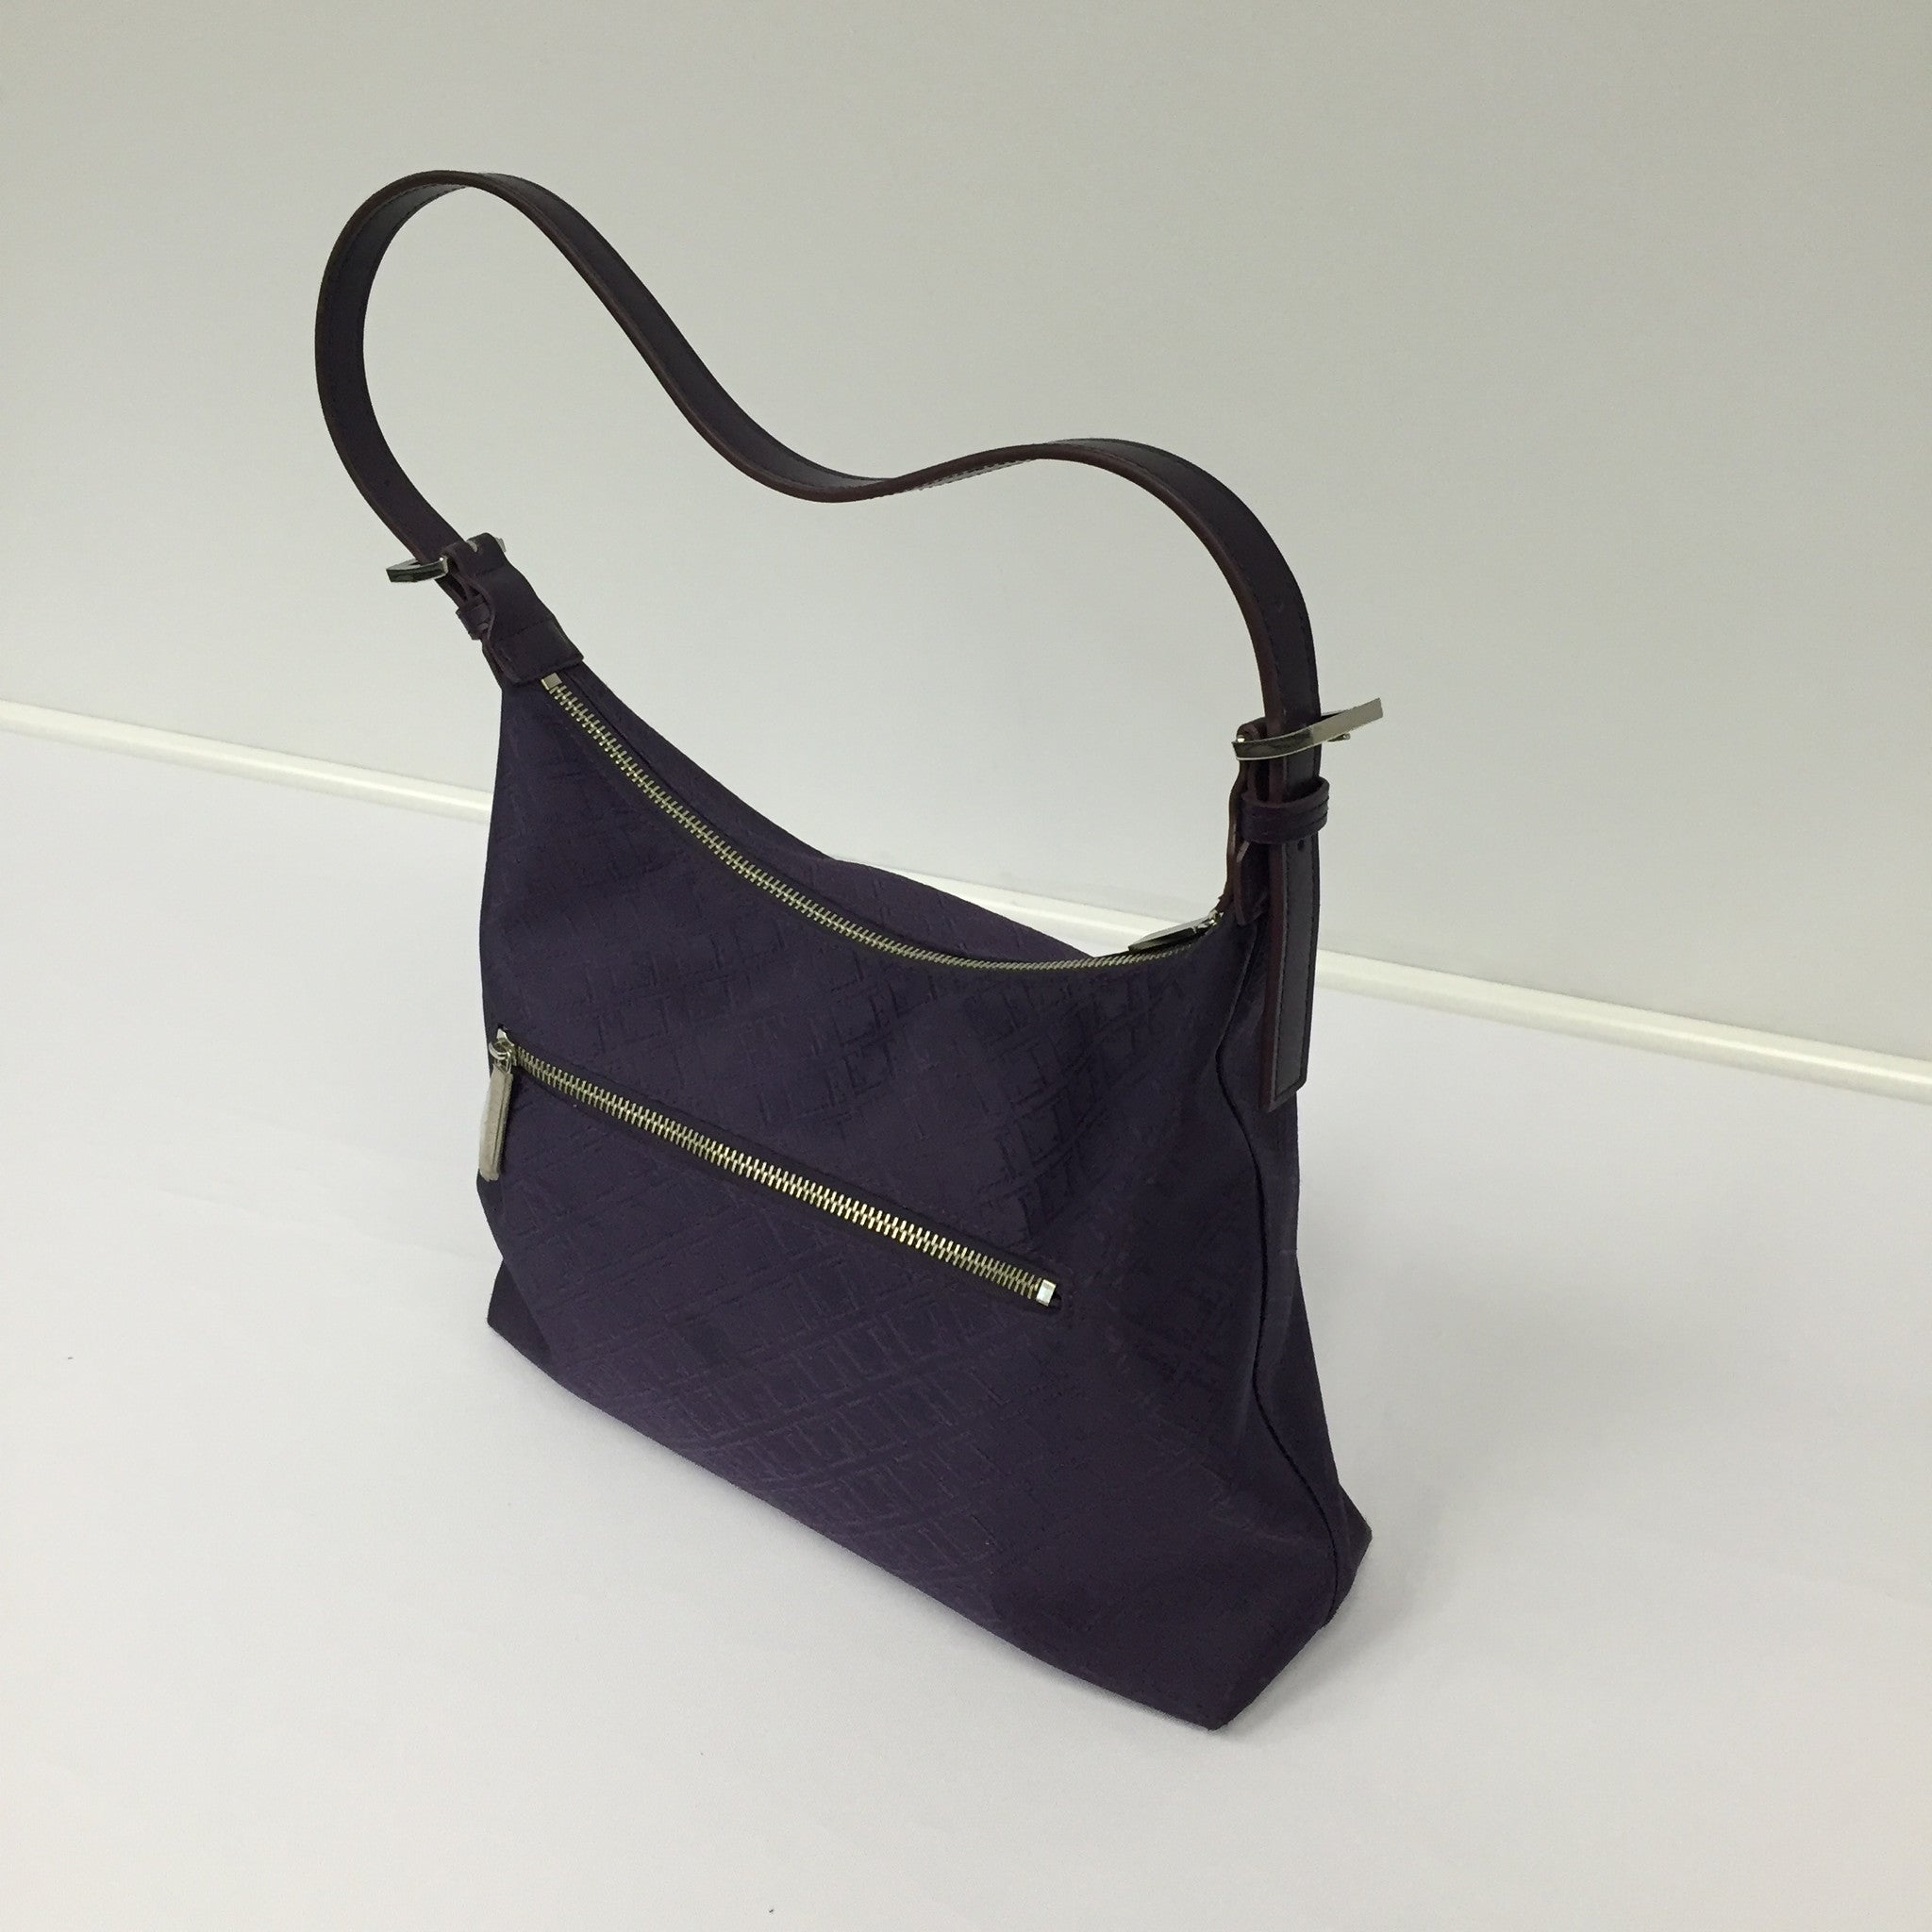 Dark Purple Leather Ruched Bag